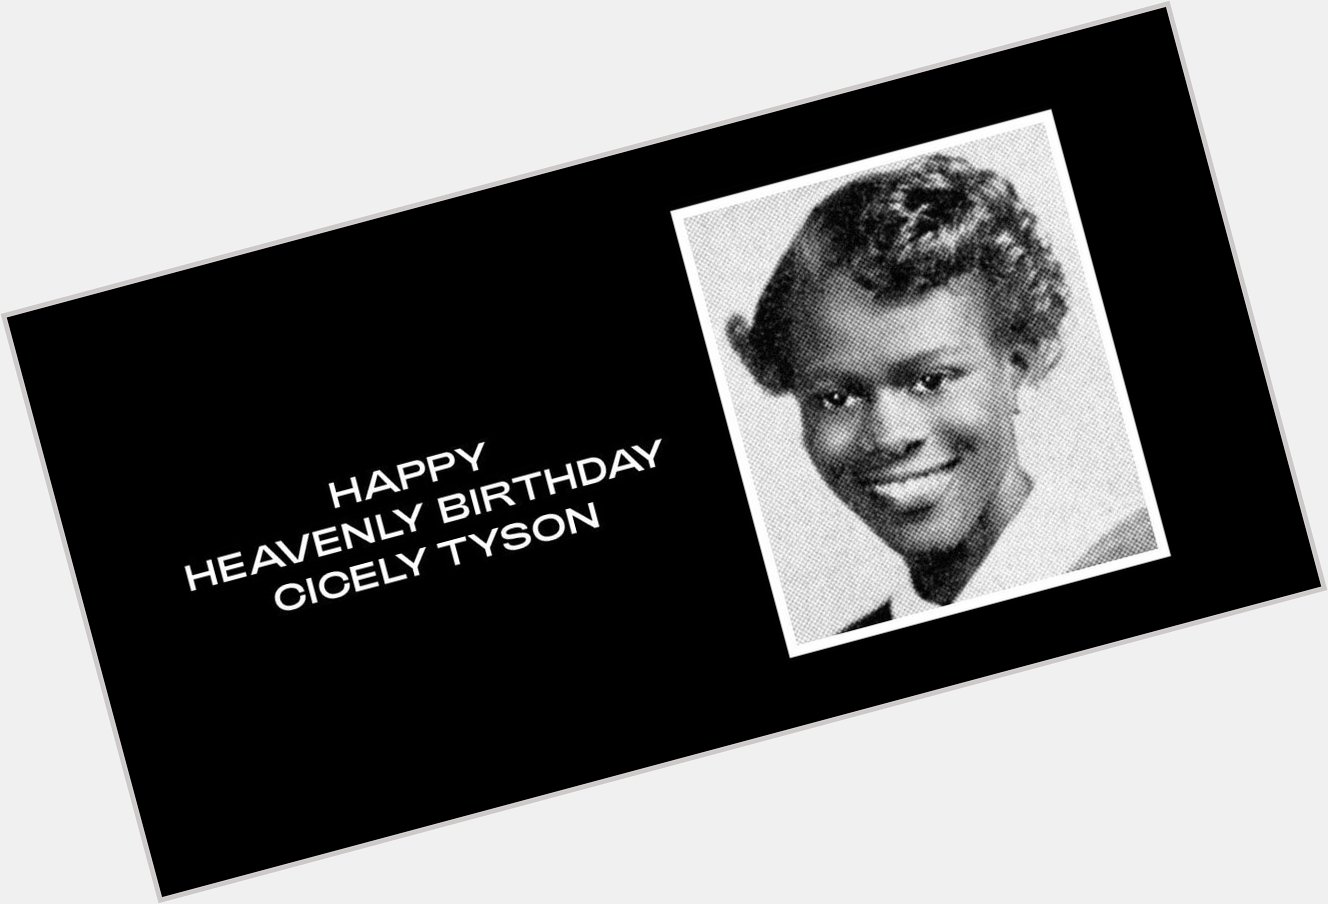 Happy Heavenly Birthday Cicely Tyson via 